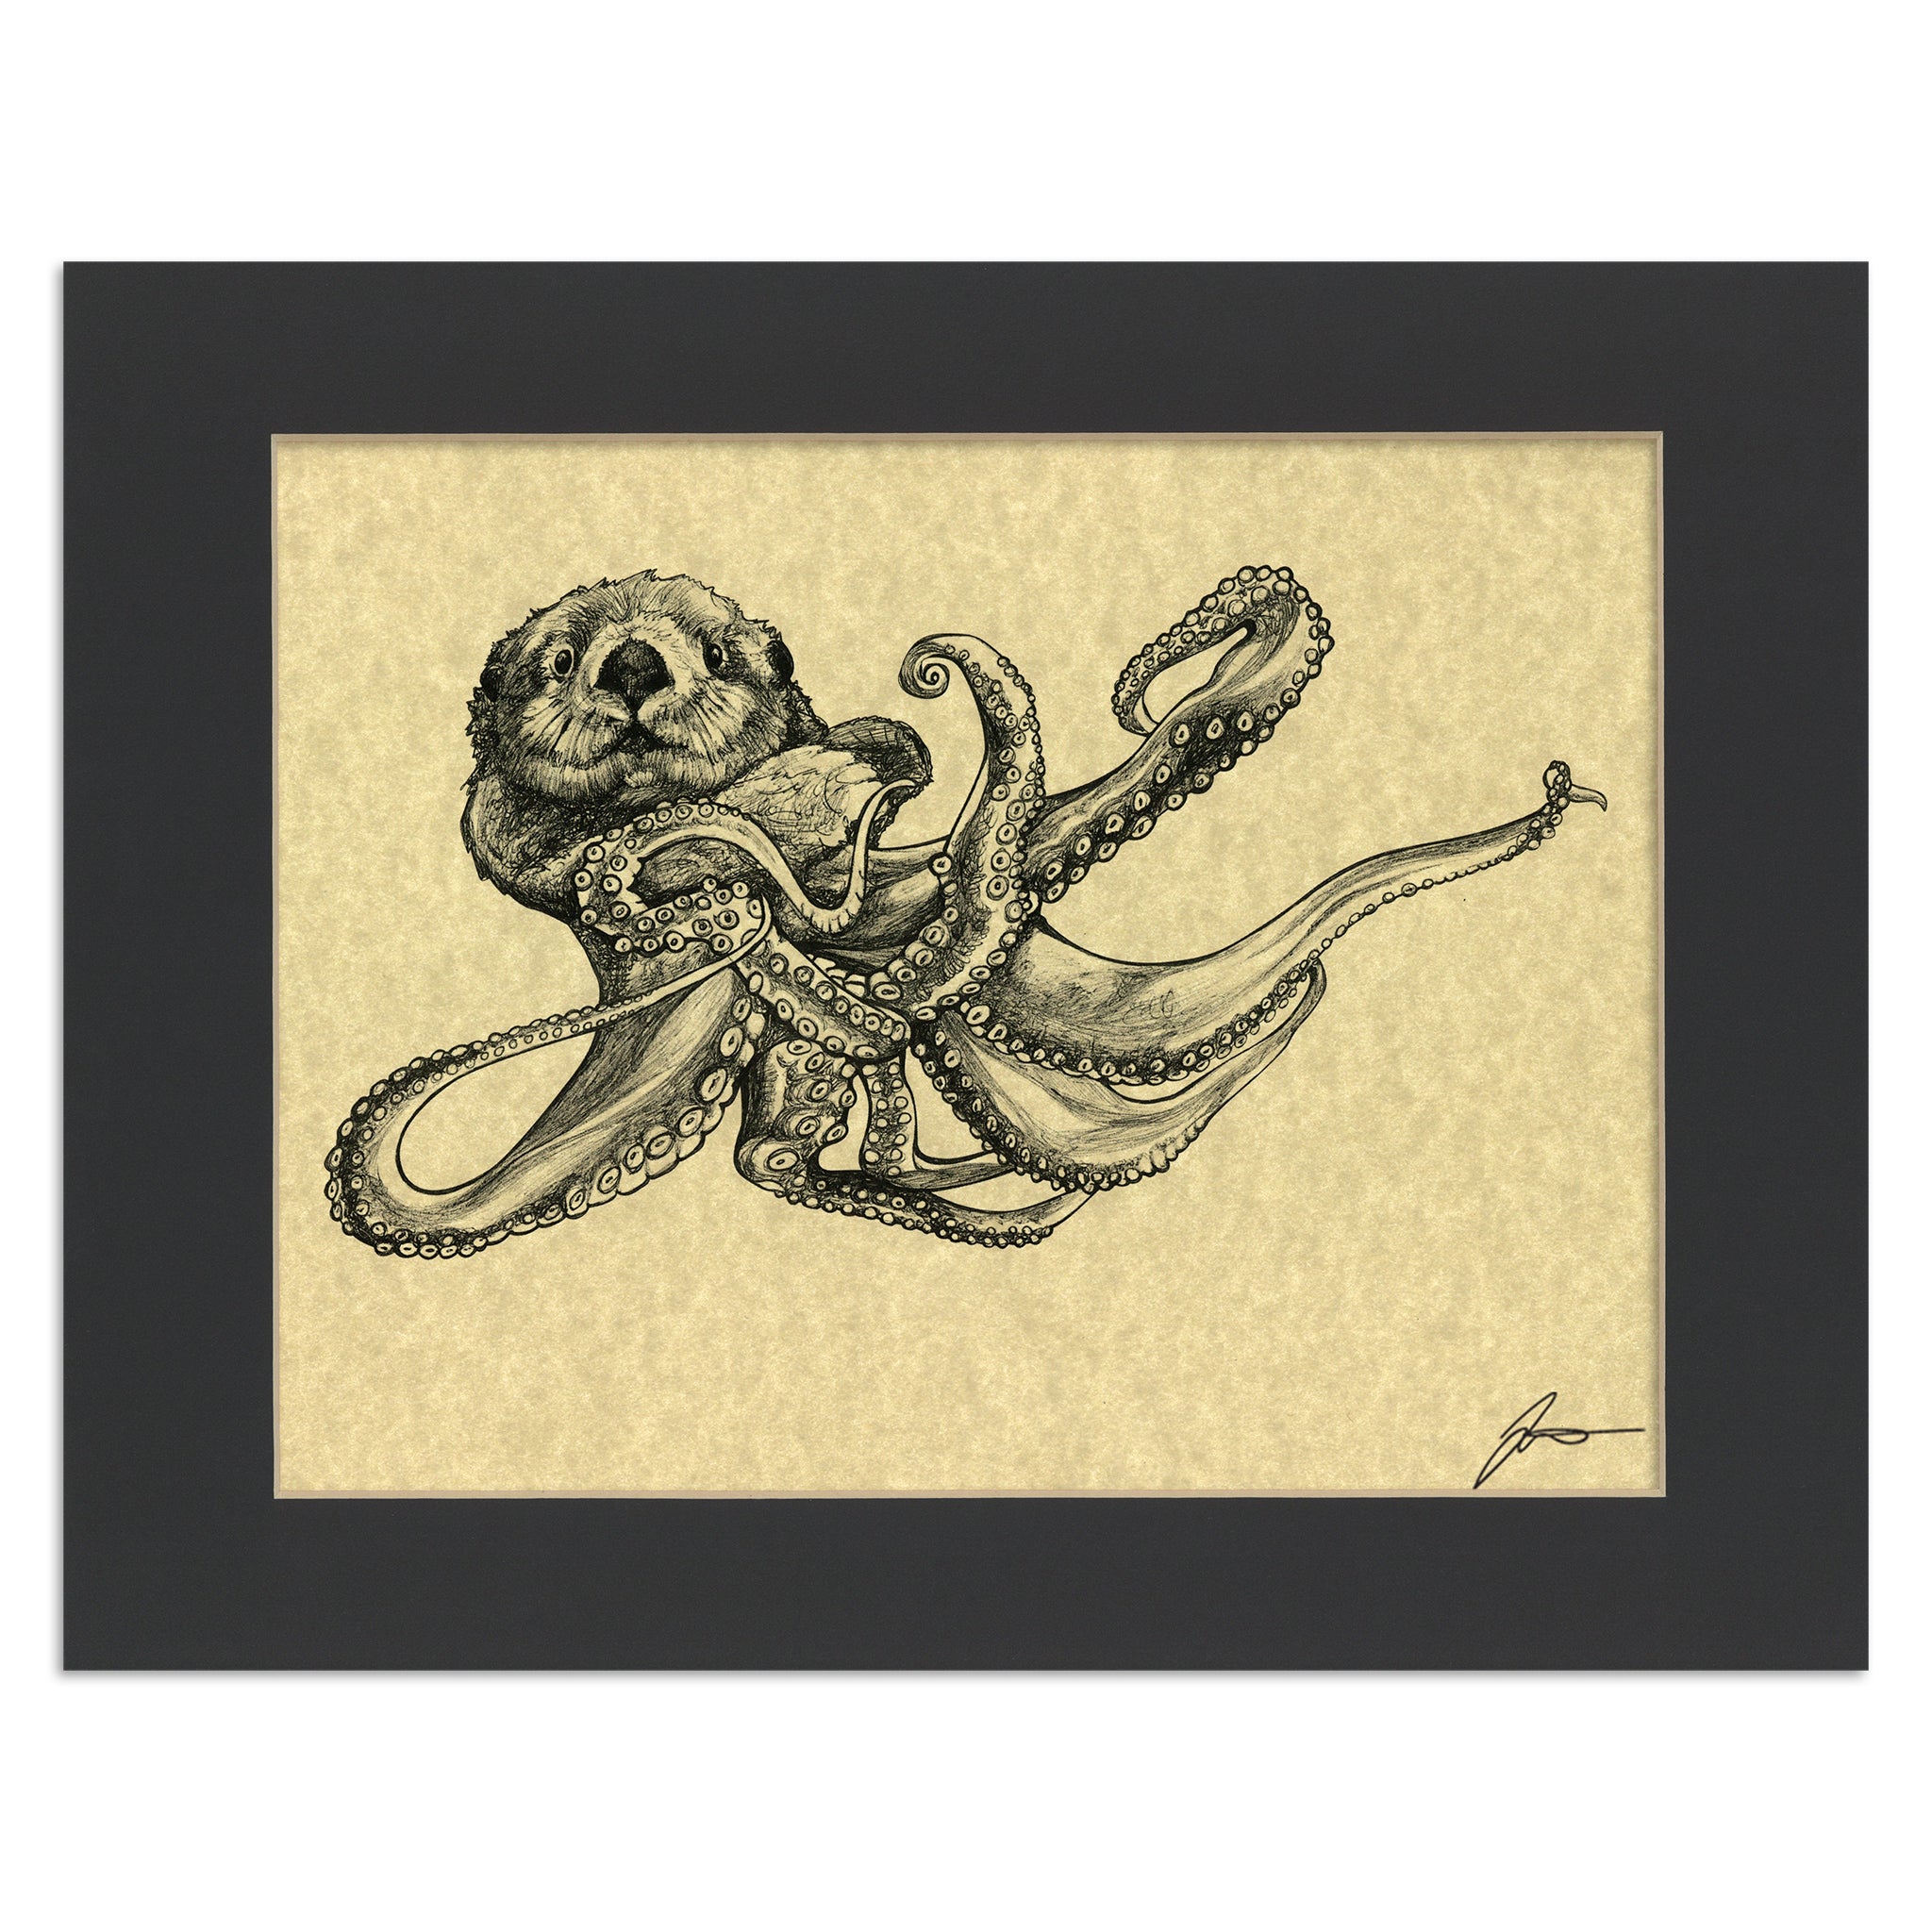 Sea Otterpus | Sea Otter + Octopus Hybrid Animal | 11x14" Parchment Print